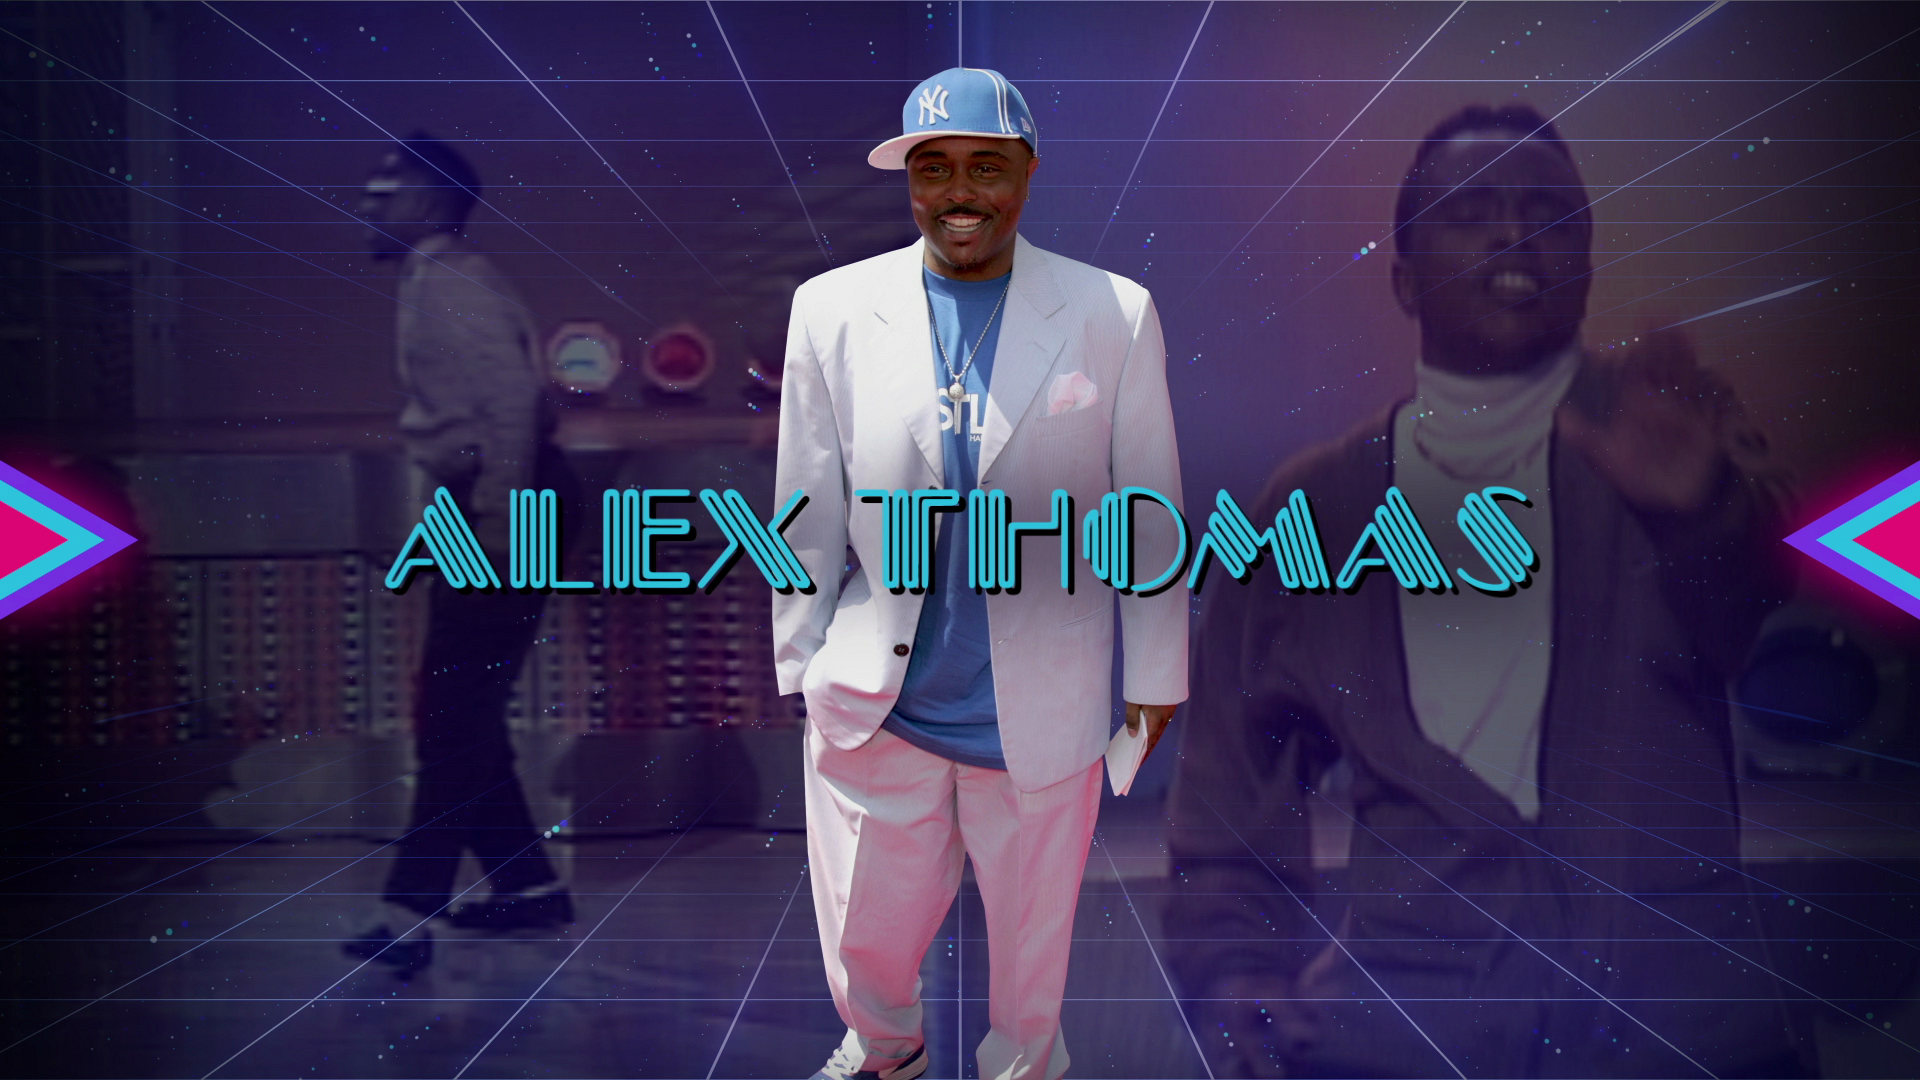 I Was A Soul Train Dancer Alex Thomas Soul Train Awards 2021 Video Clip Bet Experience